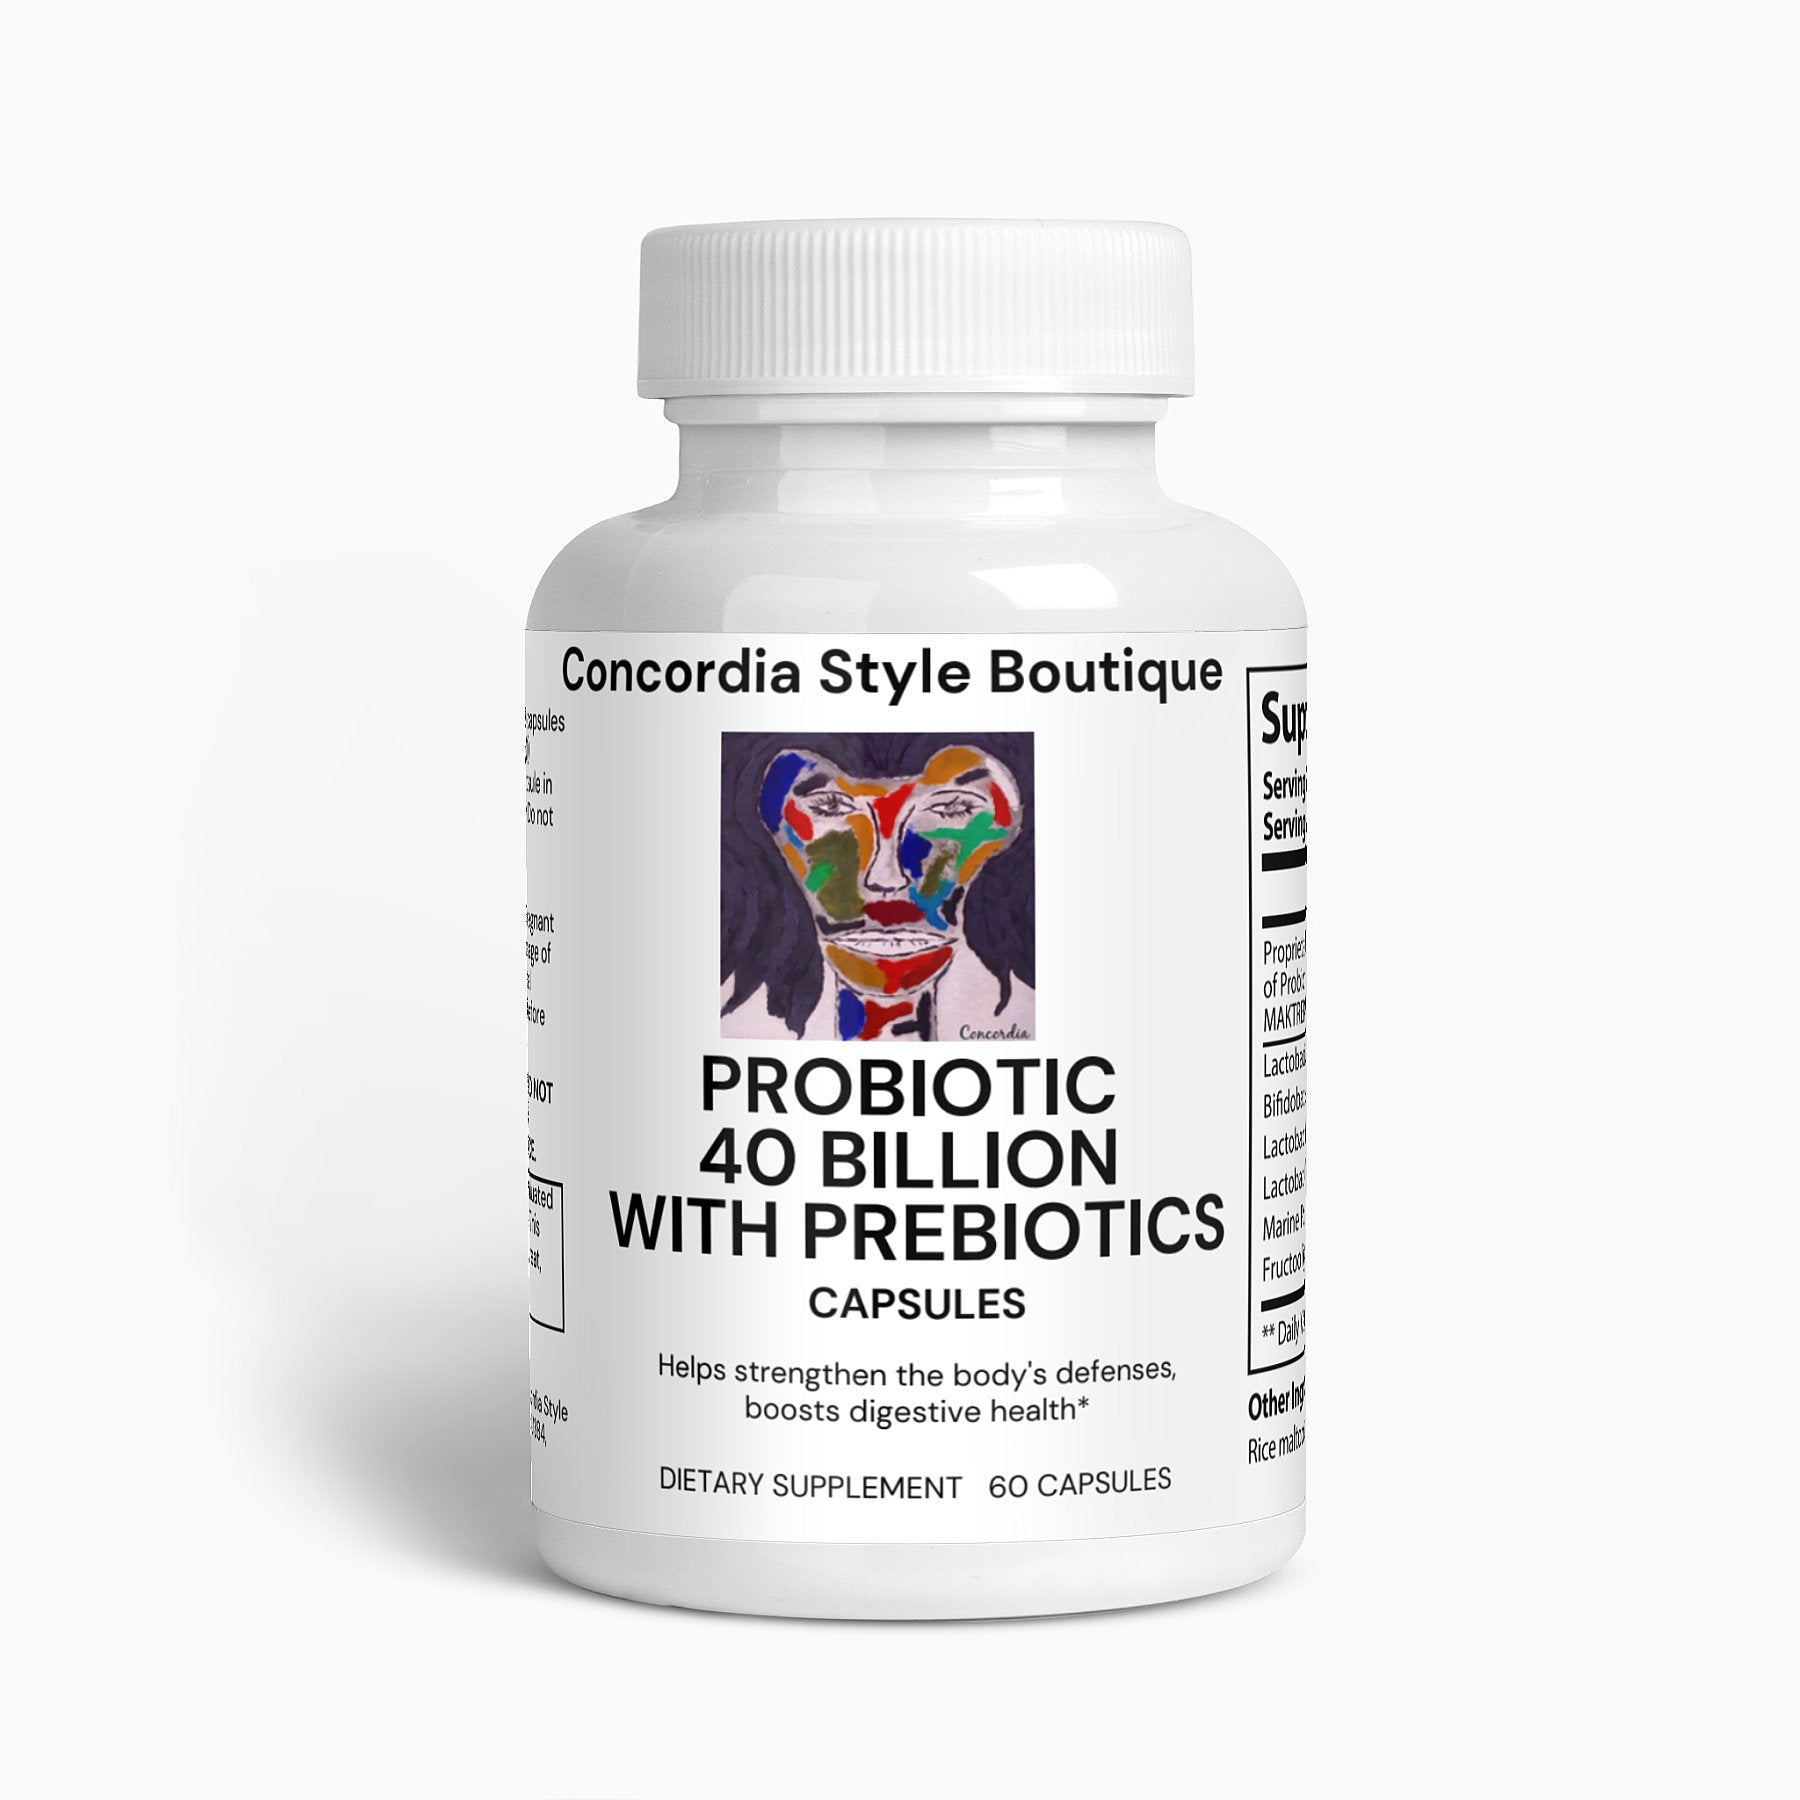 Probiotic 40 Billion with Prebiotics - Premium Specialty Supplements from Concordia Style Boutique - Just $32! Shop now at Concordia Style Boutique